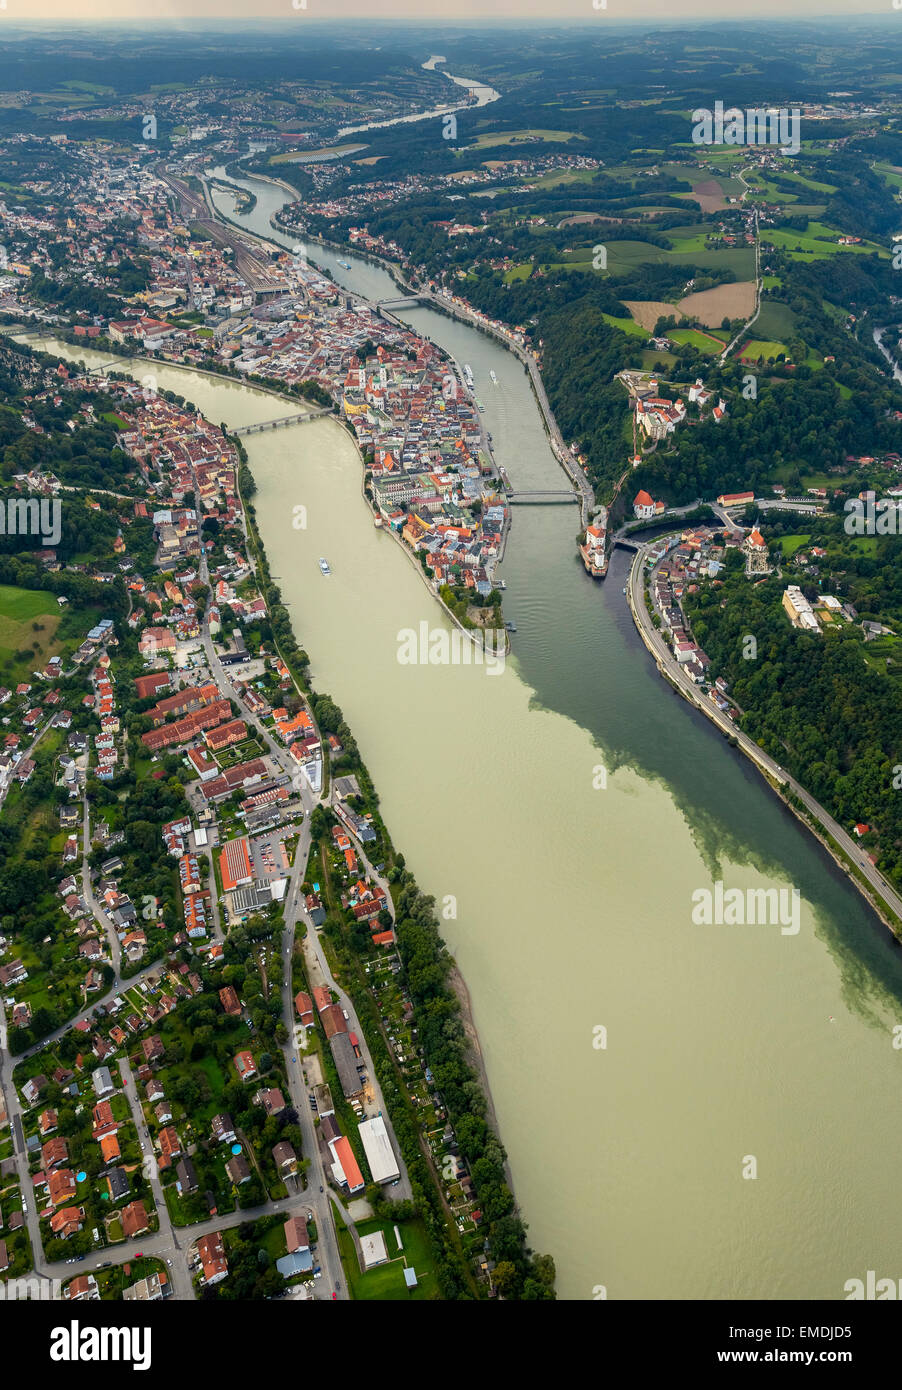 Historic centre of Passau, confluence of the three rivers, Danube, Inn and Ilz, Passau, Lower Bavaria, Bavaria, Germany Stock Photo